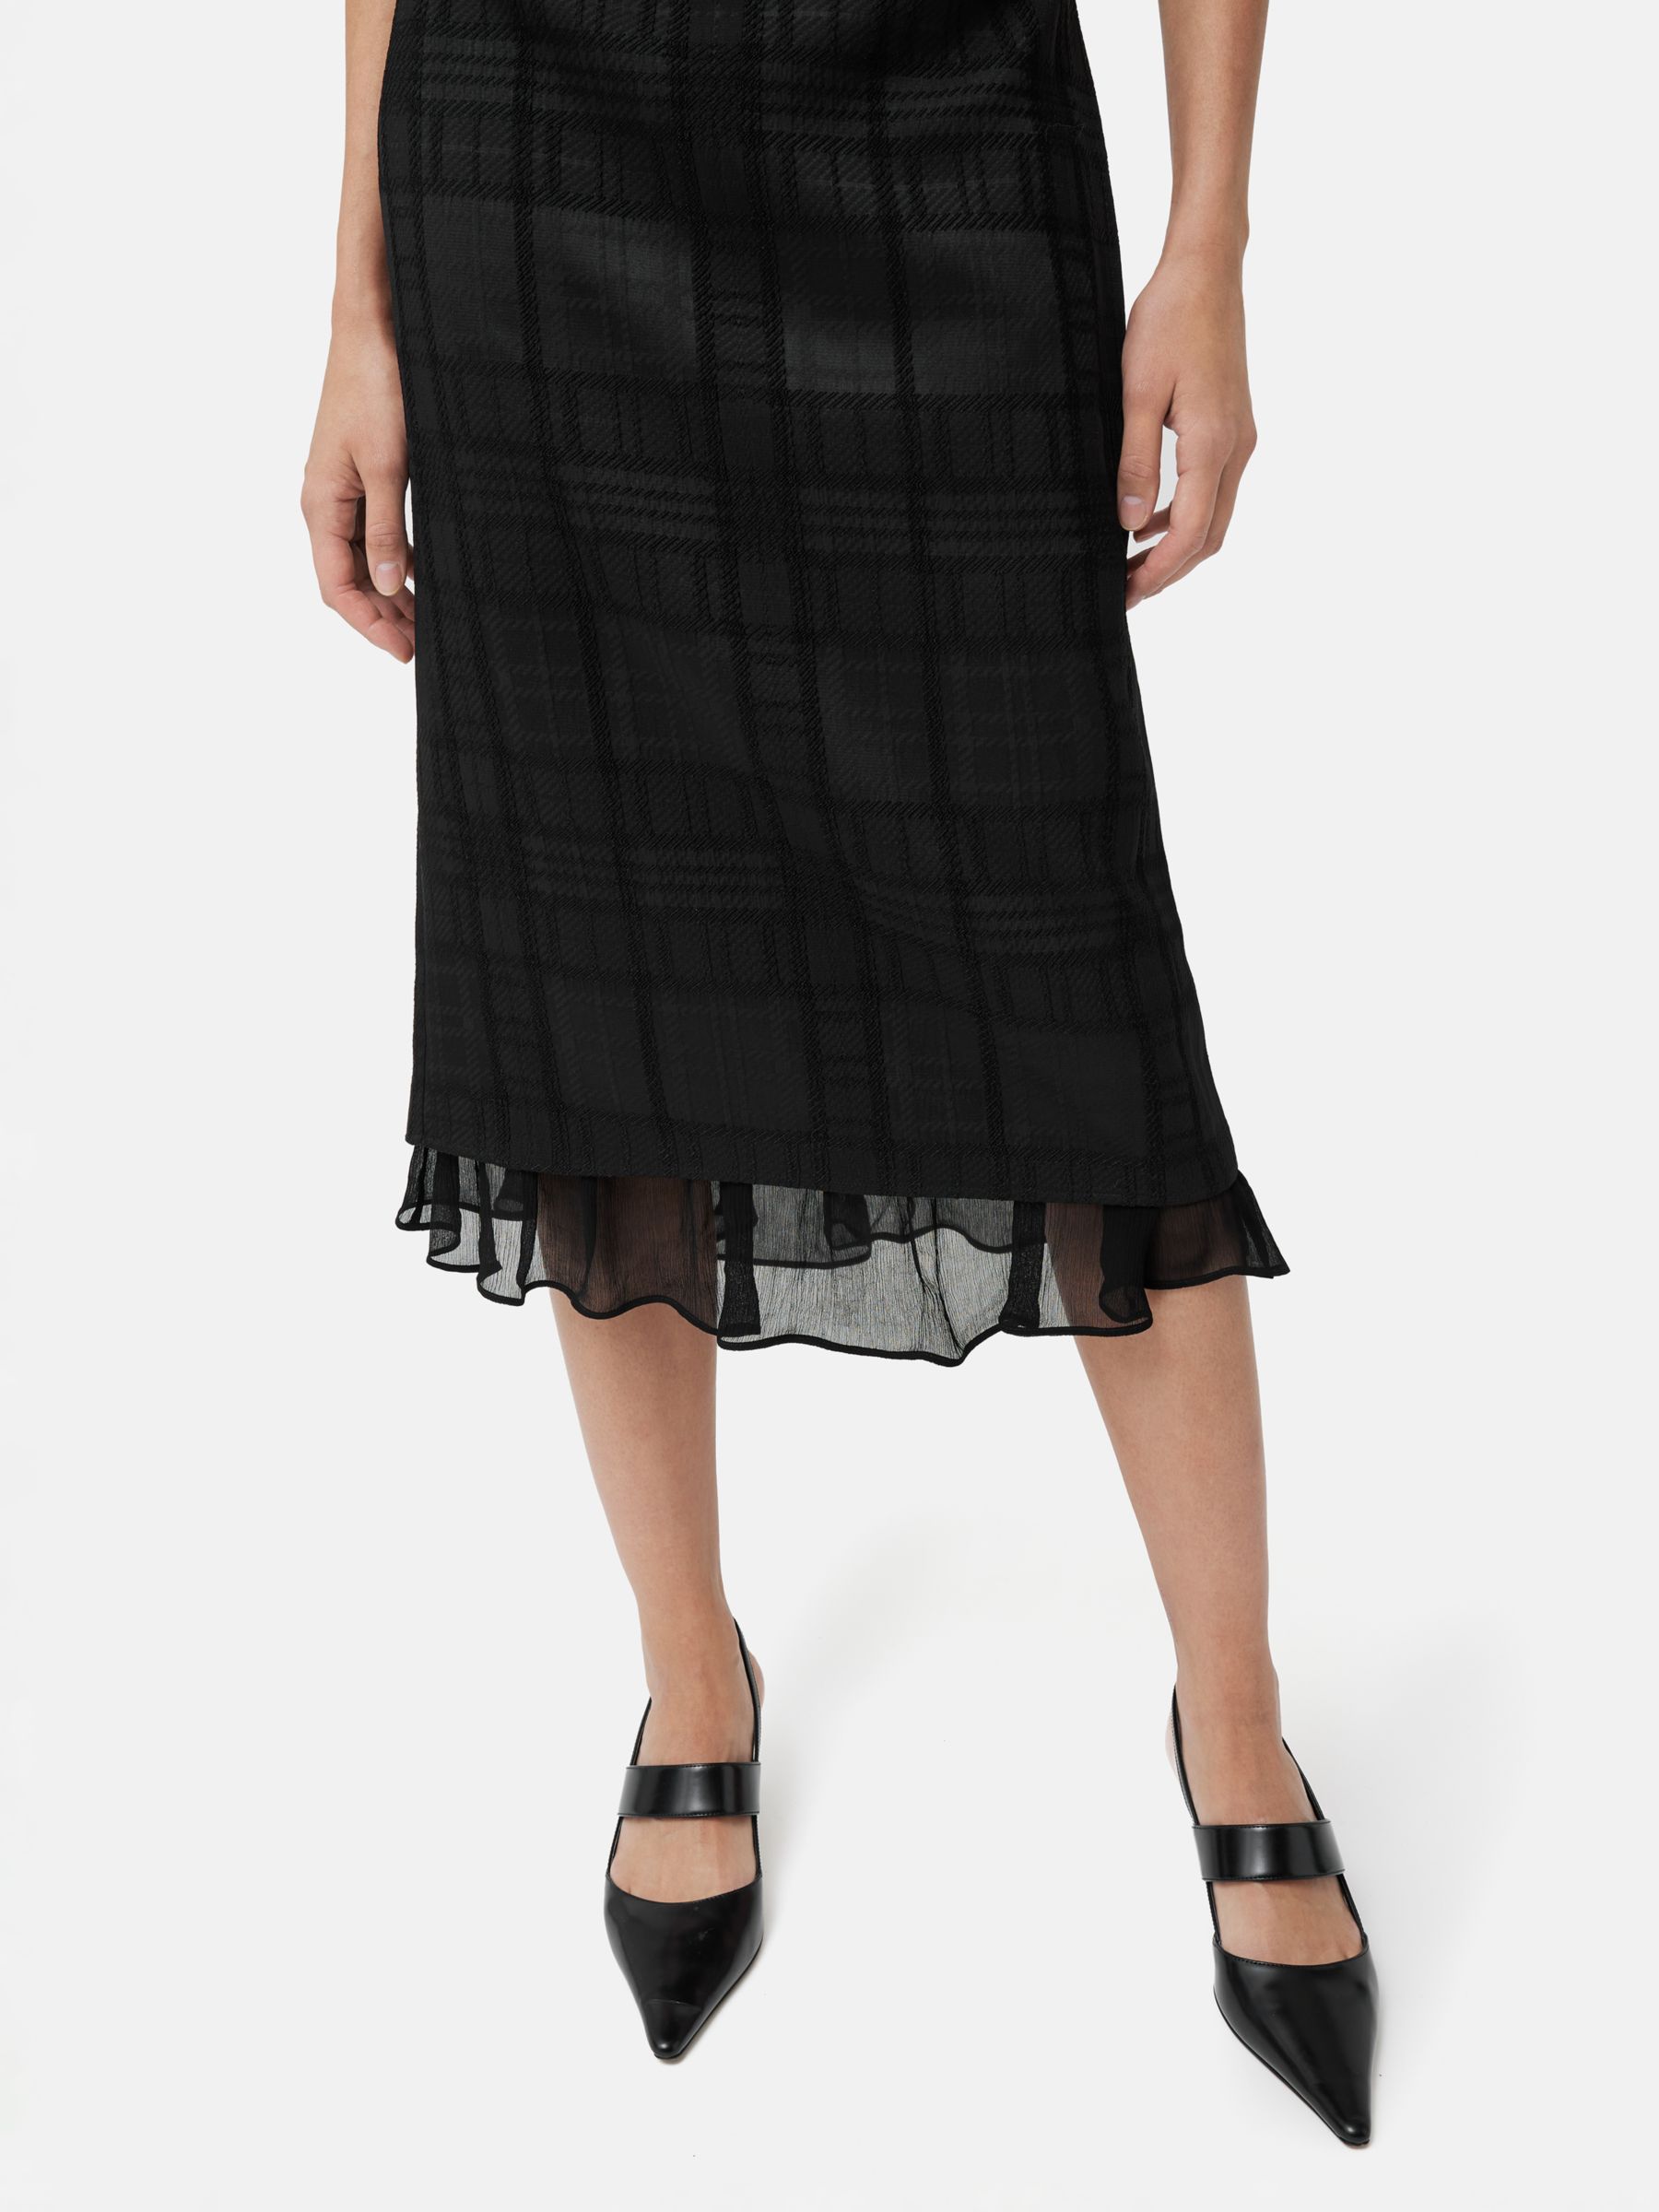 Jigsaw Textured Jacquard Check Midi Dress, Black, 6